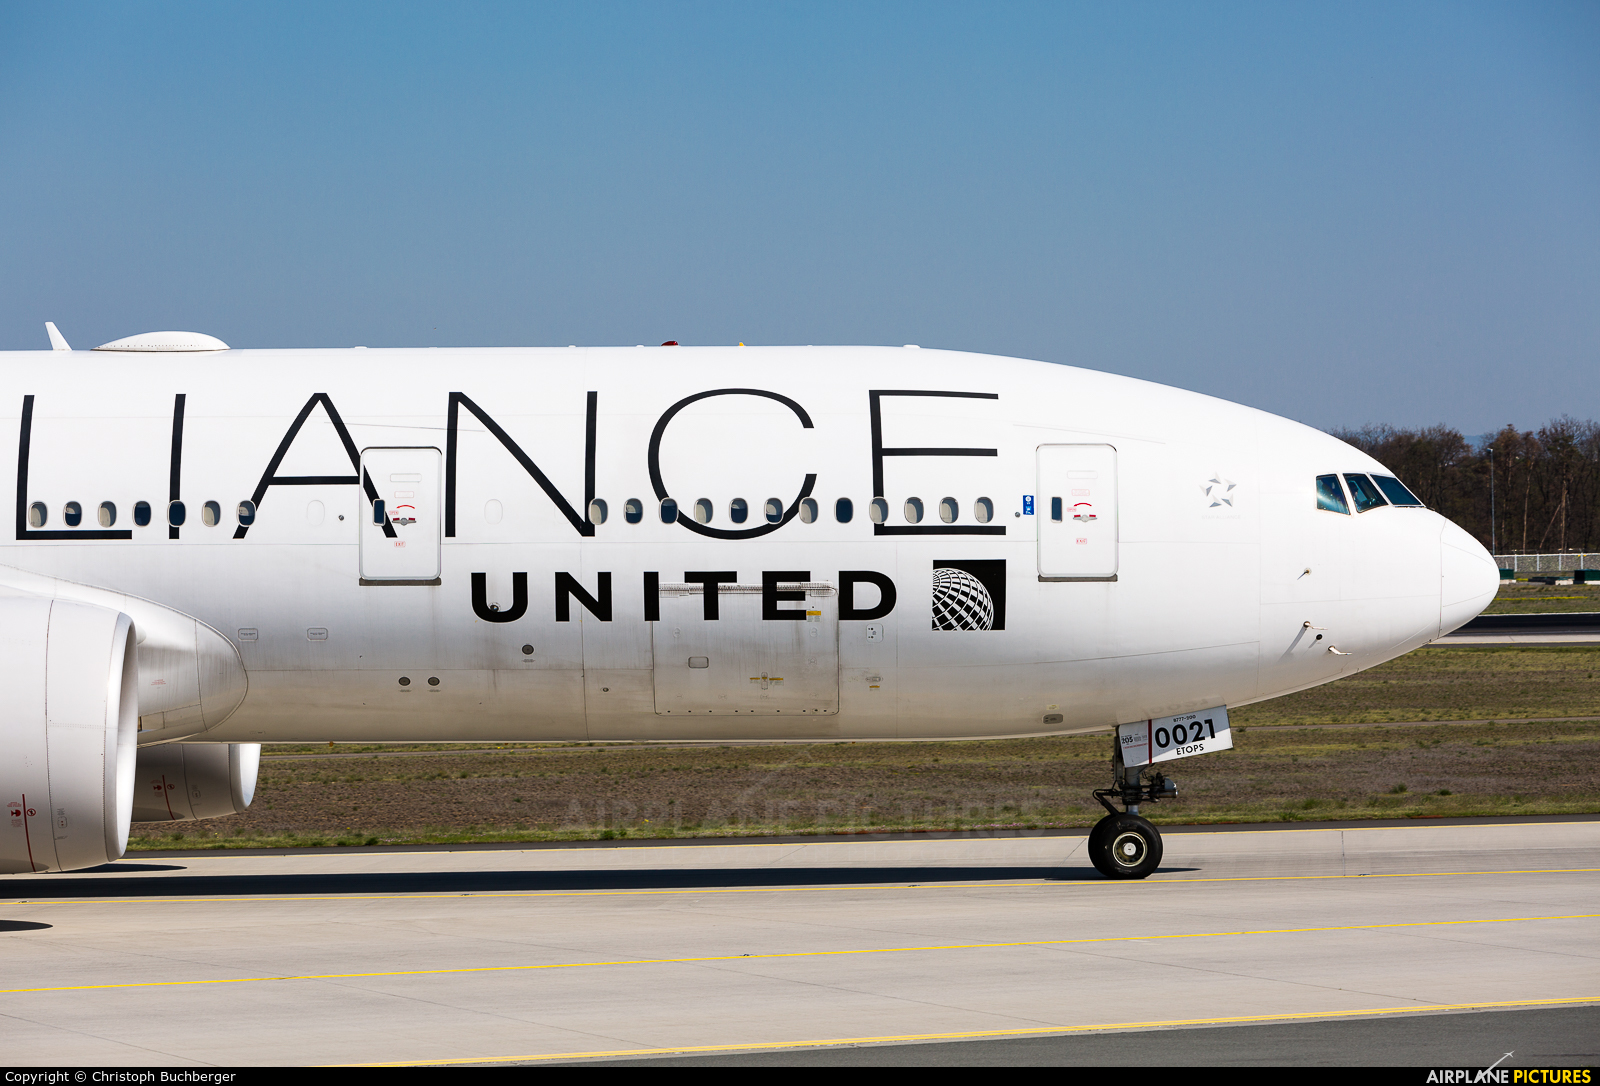 United Airlines N76021 aircraft at Frankfurt